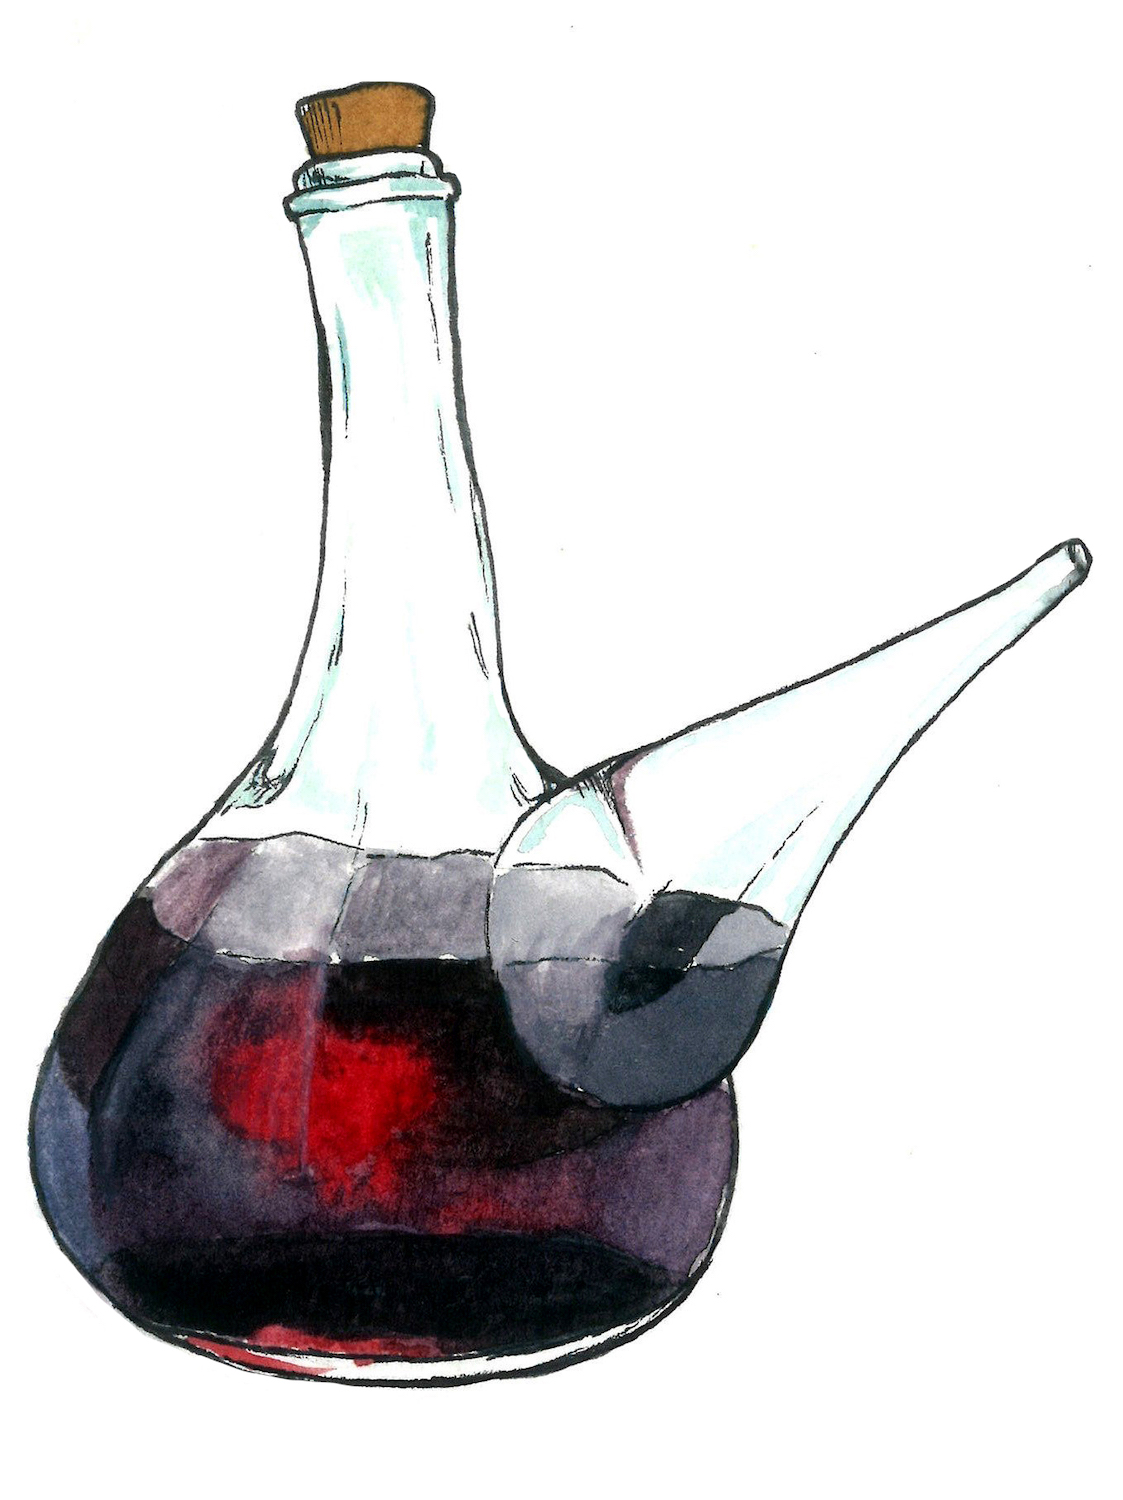 Illustration of historic alcoholic glassware Porrón